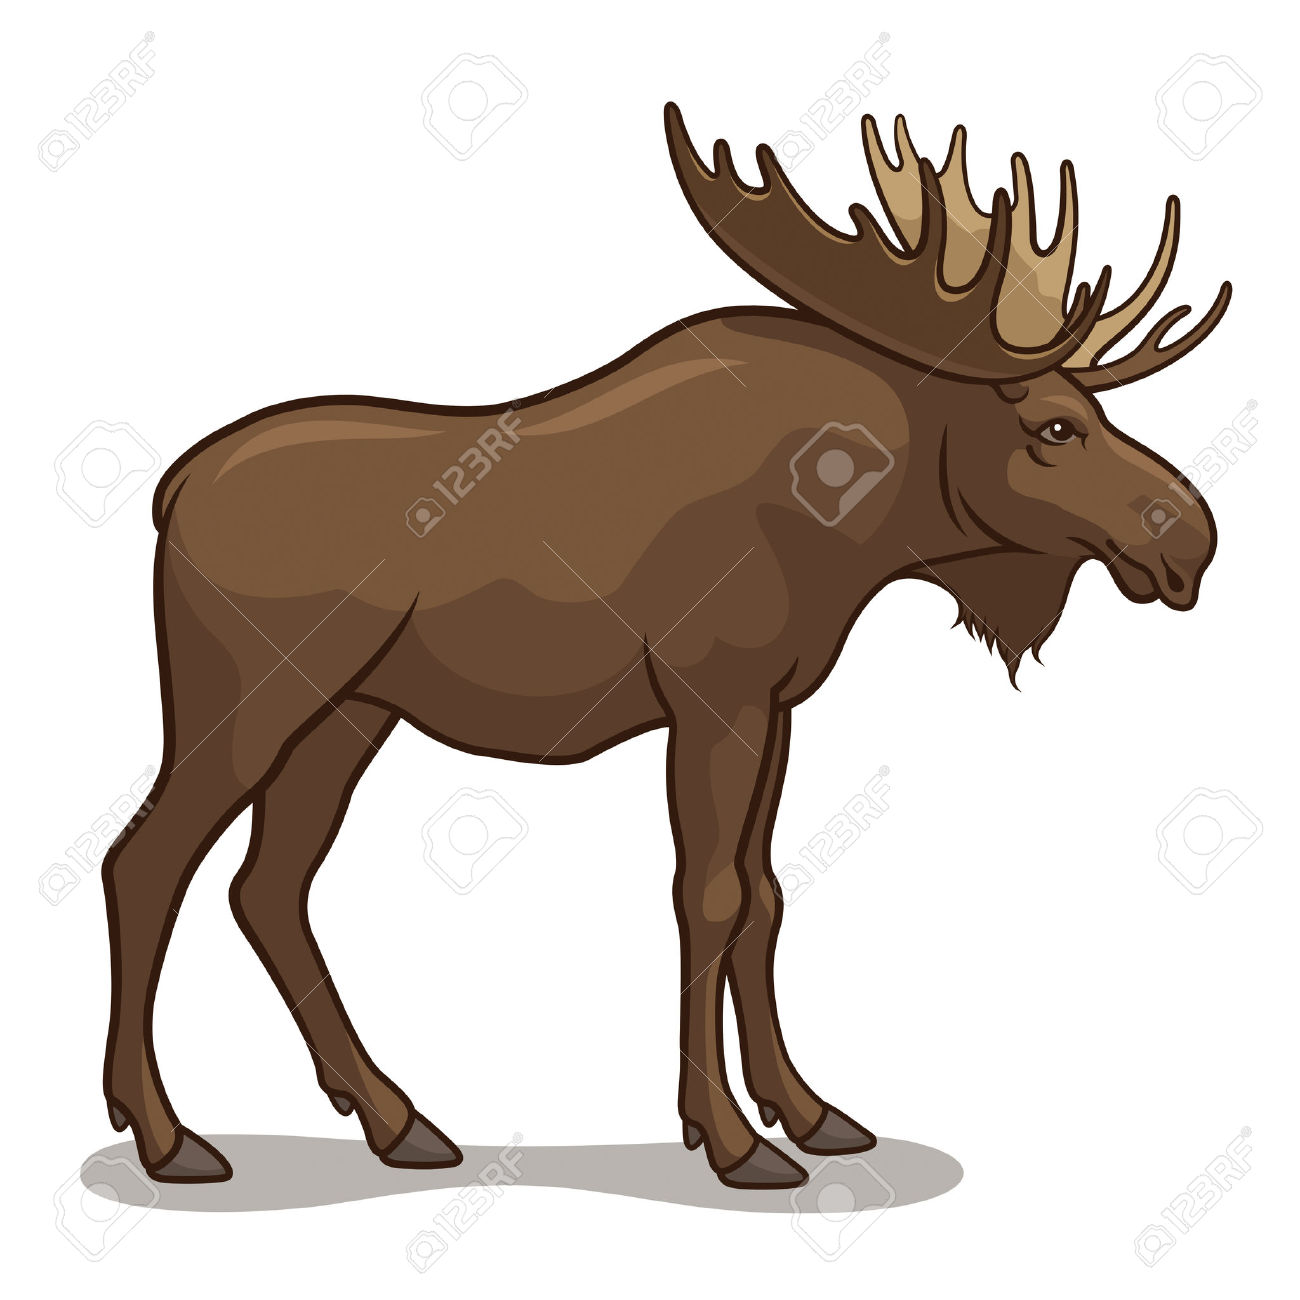 6,062 Elk Stock Vector Illustration And Royalty Free Elk Clipart.